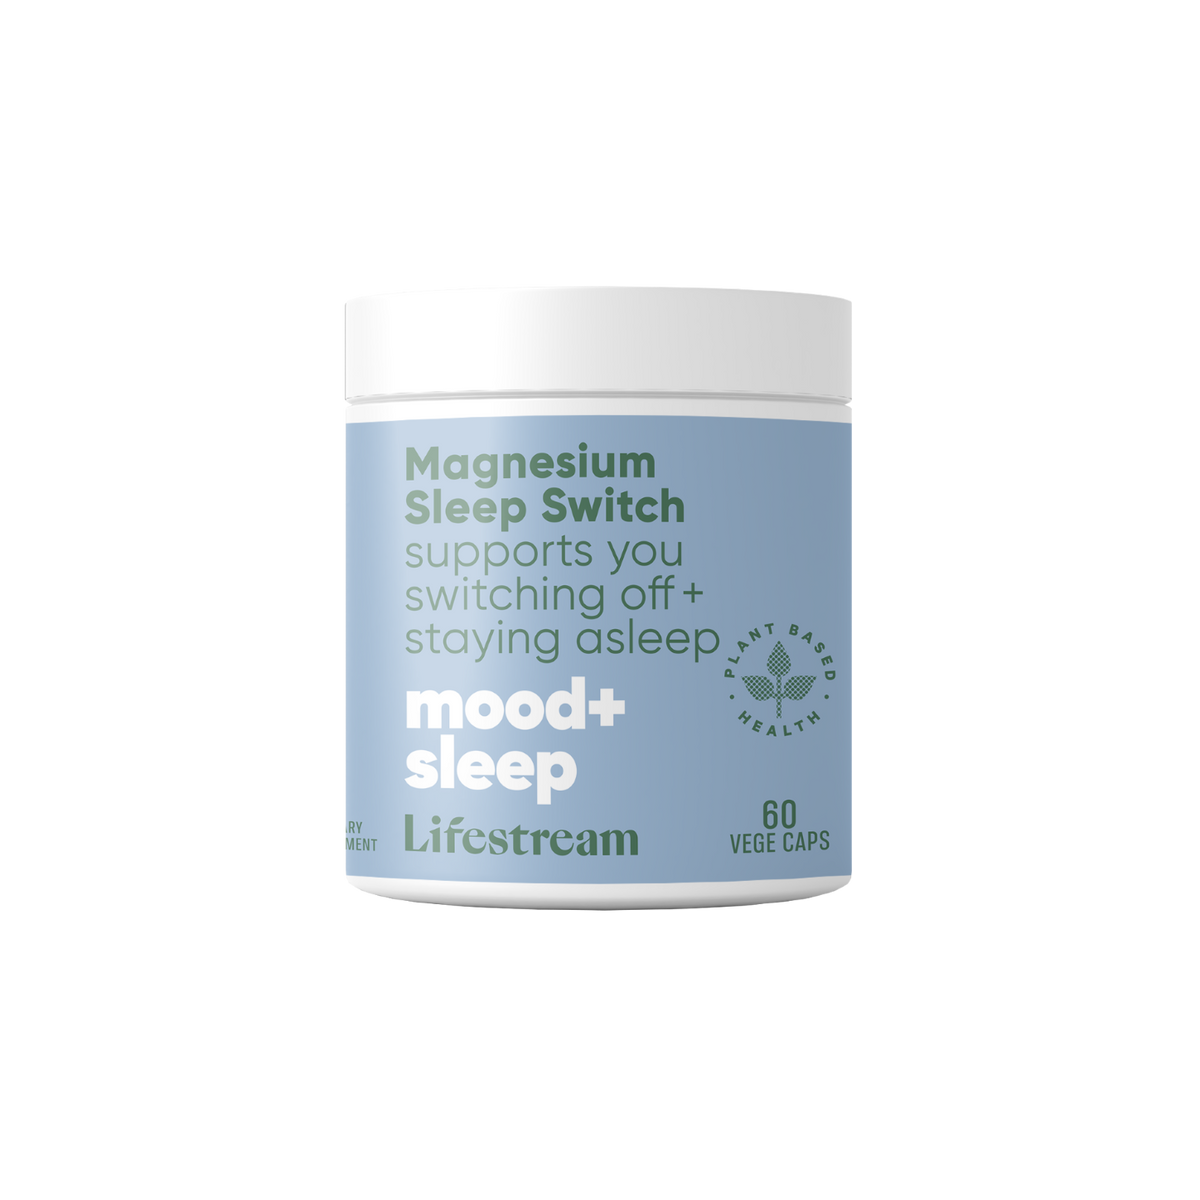 Lifestream Magnesium Sleep Switch (60 Capsules)